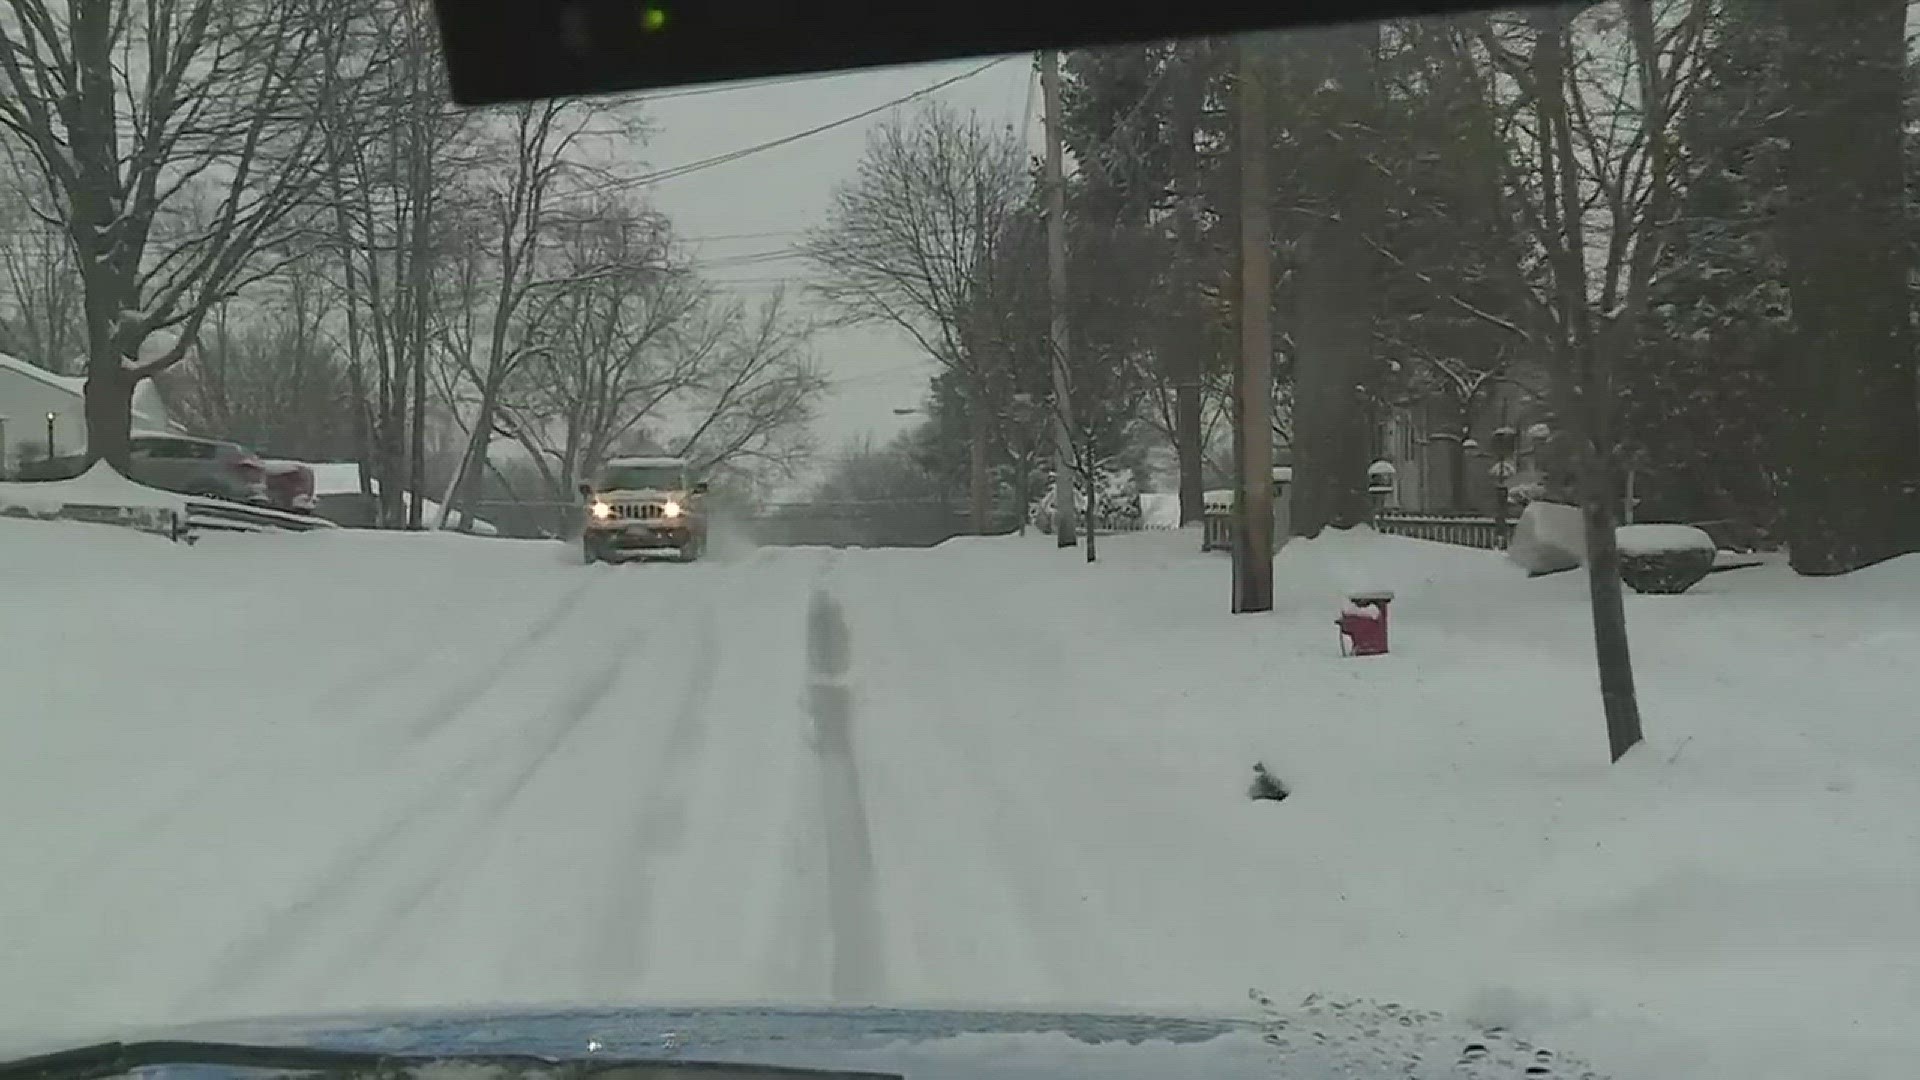 Driving on Akron's snowy roads